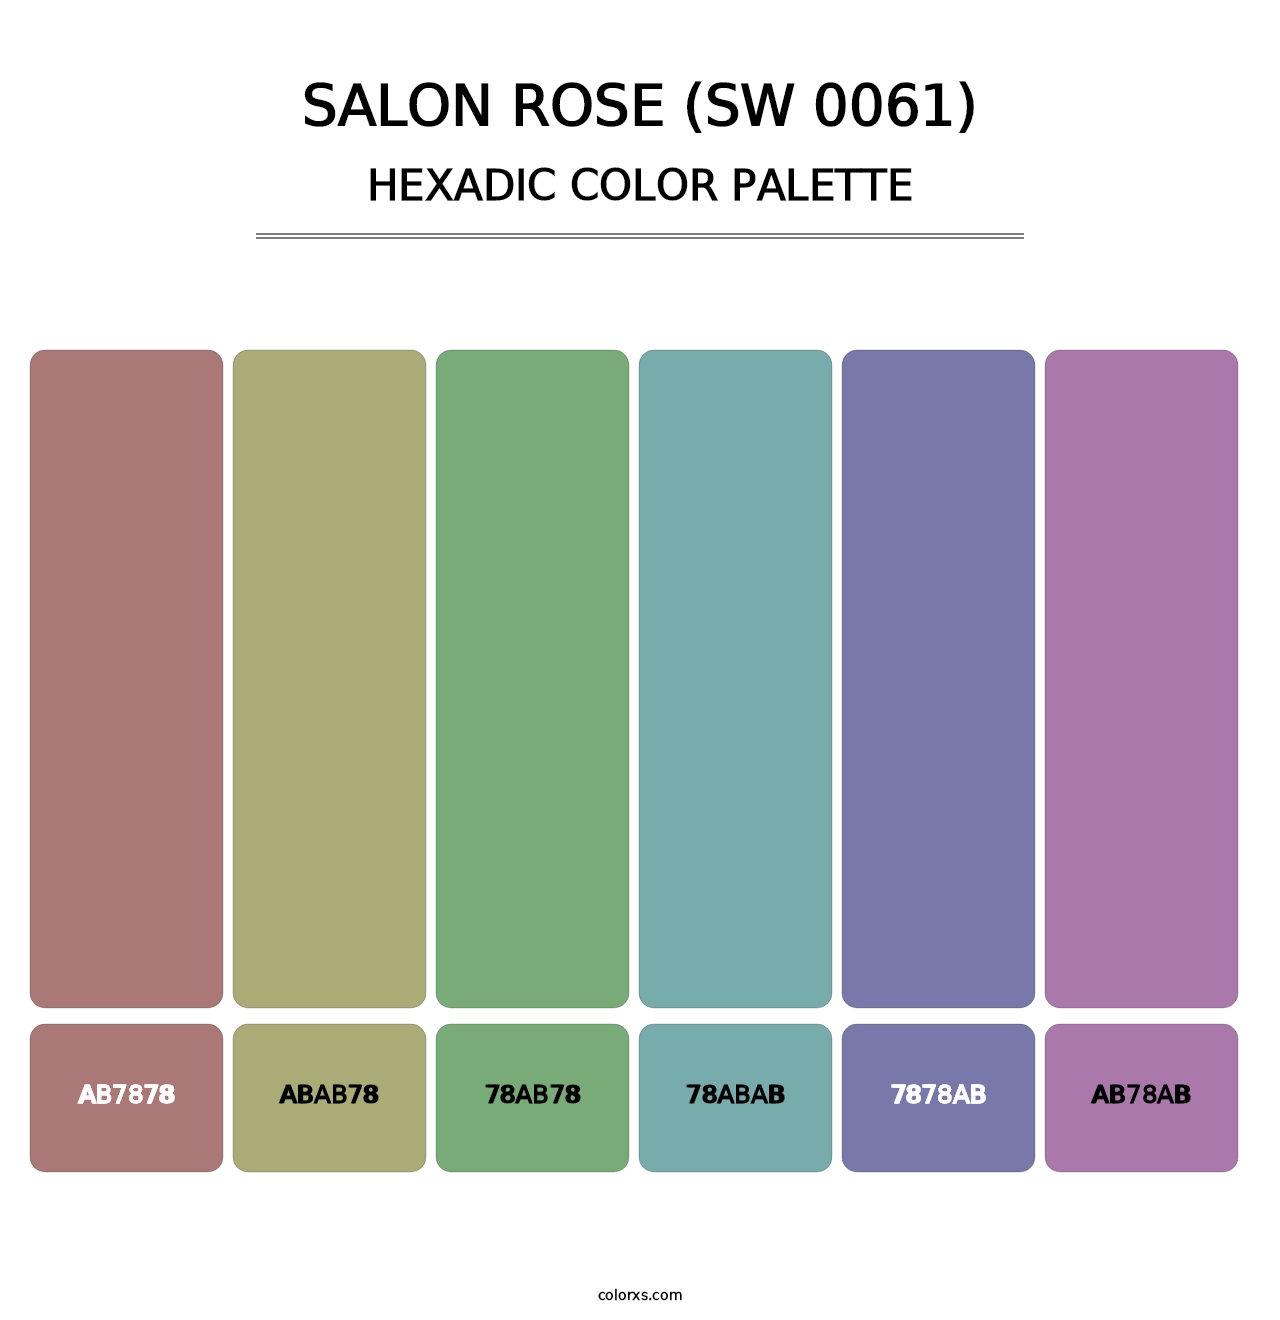 Salon Rose (SW 0061) - Hexadic Color Palette